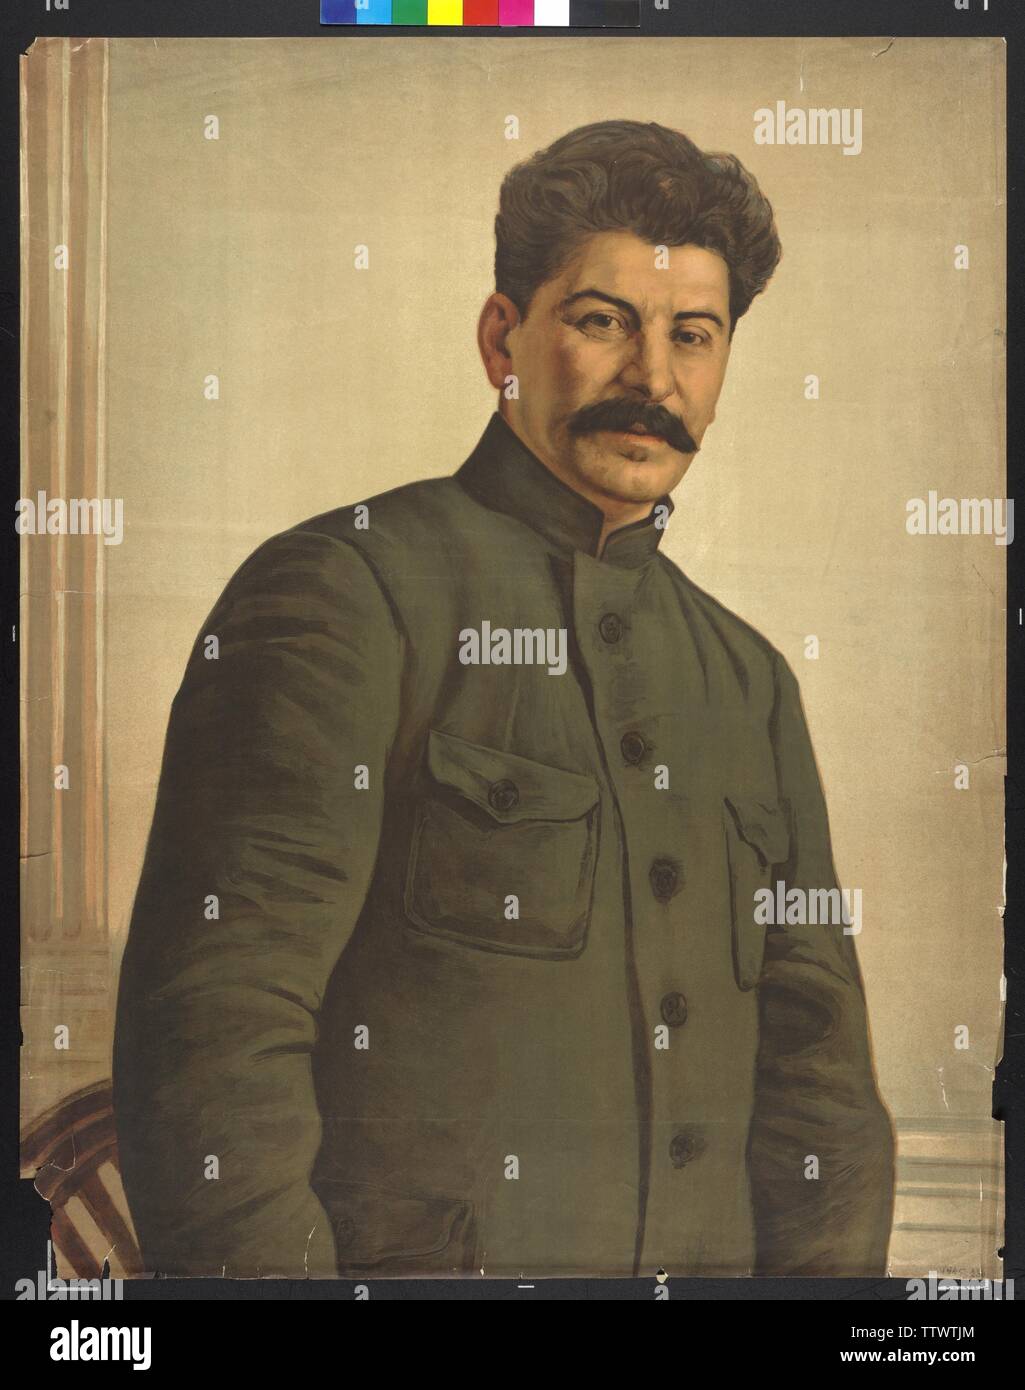 Staline, Joseph Wissarionovitch, impression couleur basée sur Additional-Rights Clearance-Info, peinture--Not-Available Banque D'Images